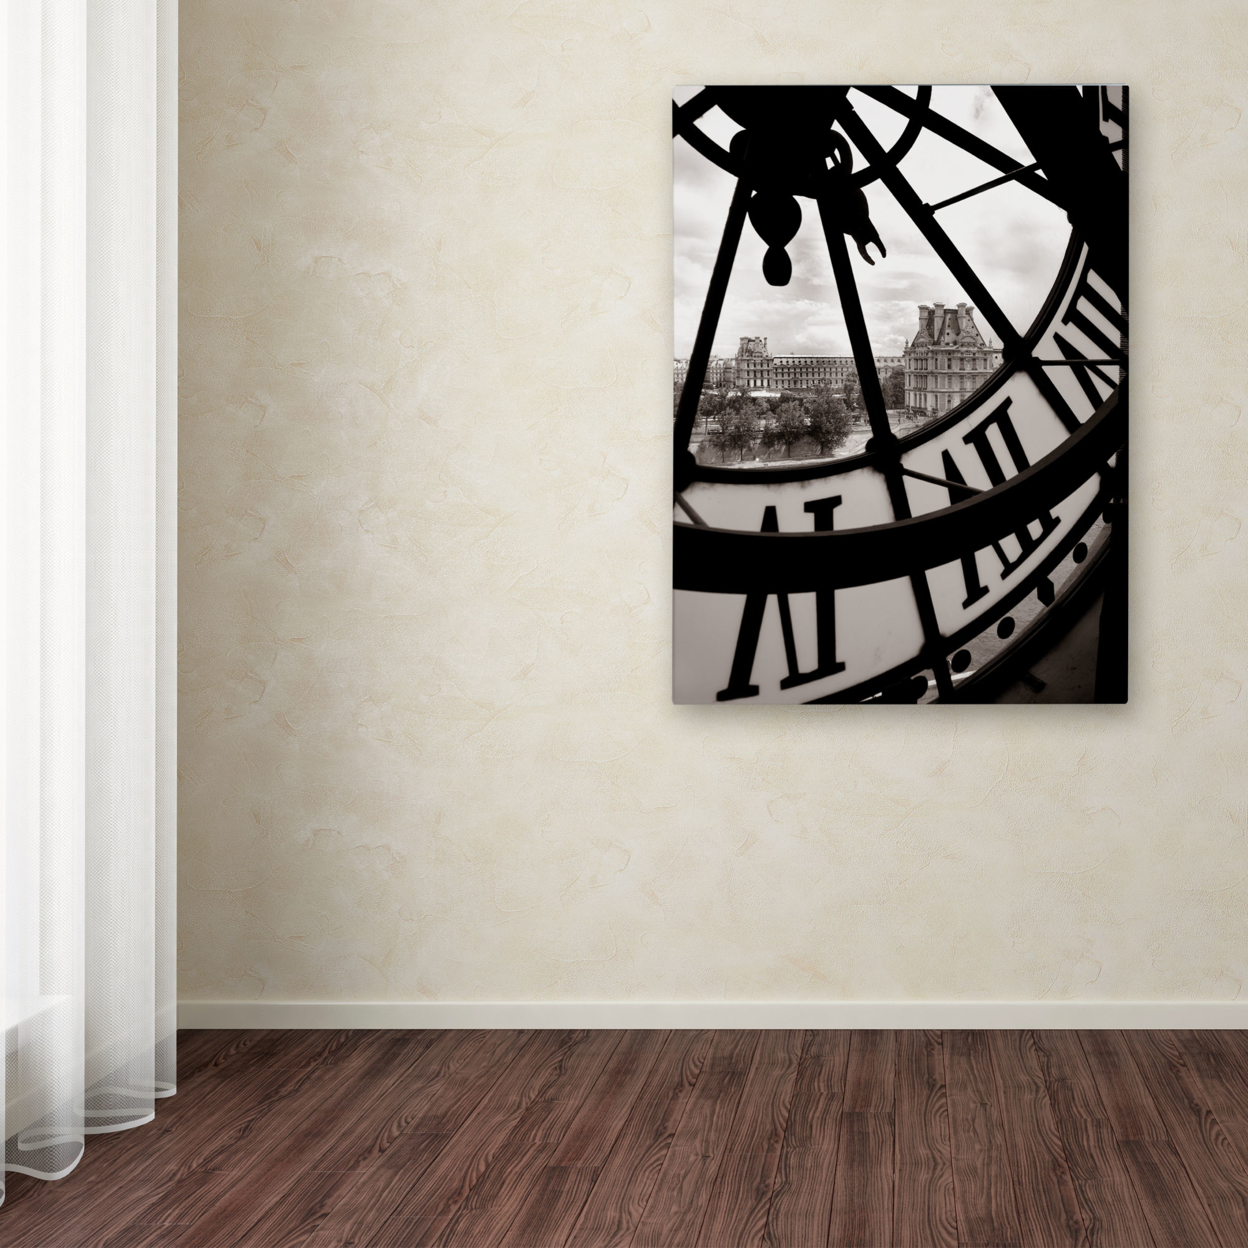 Chris Bliss 'Big Clock' Canvas Wall Art 35 X 47 Inches